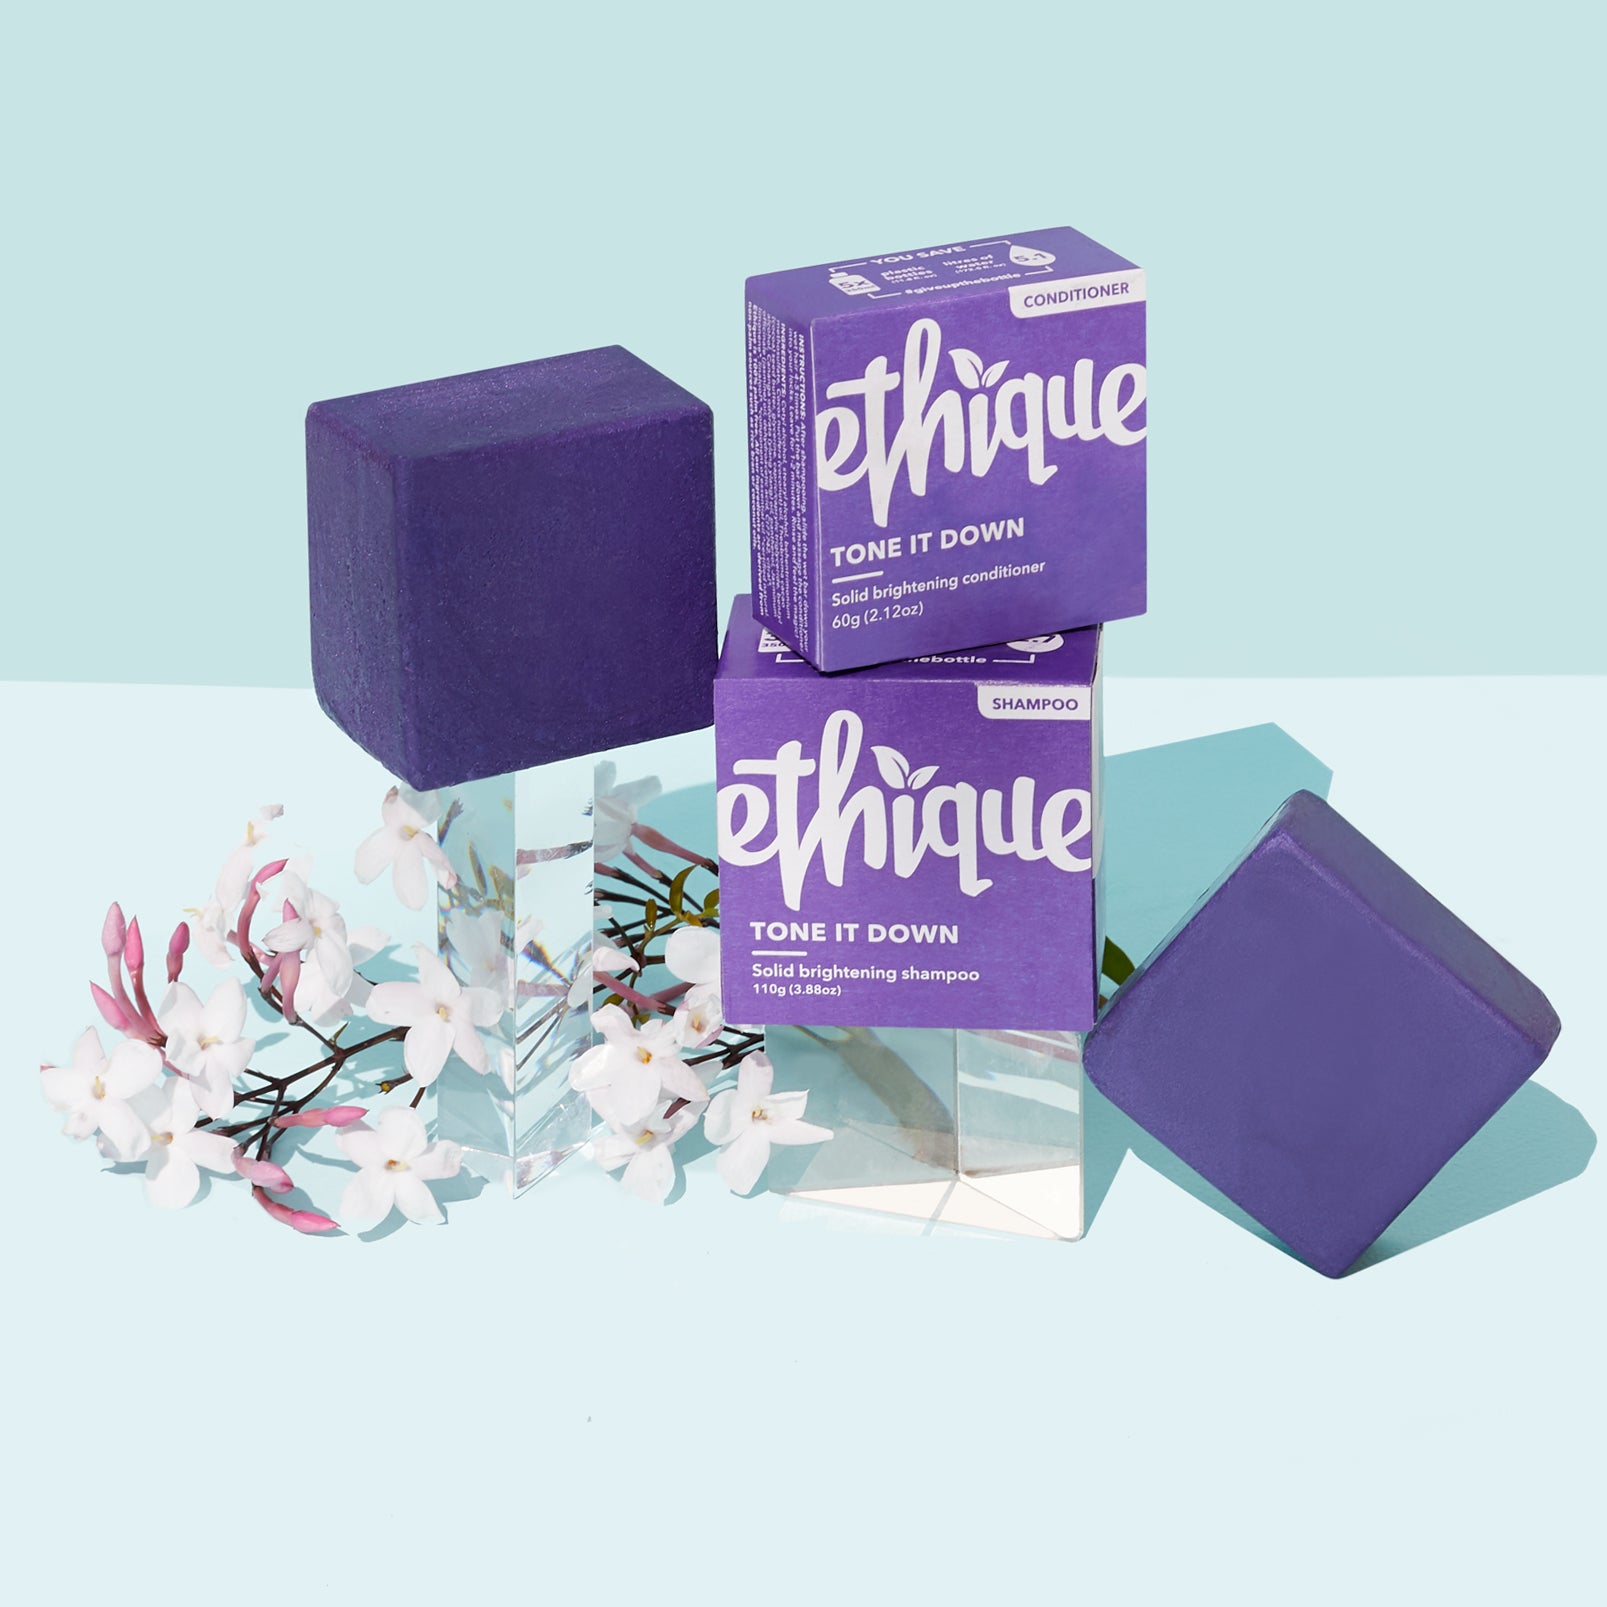 Tone It Down™ Brightening Purple Shampoo Bar